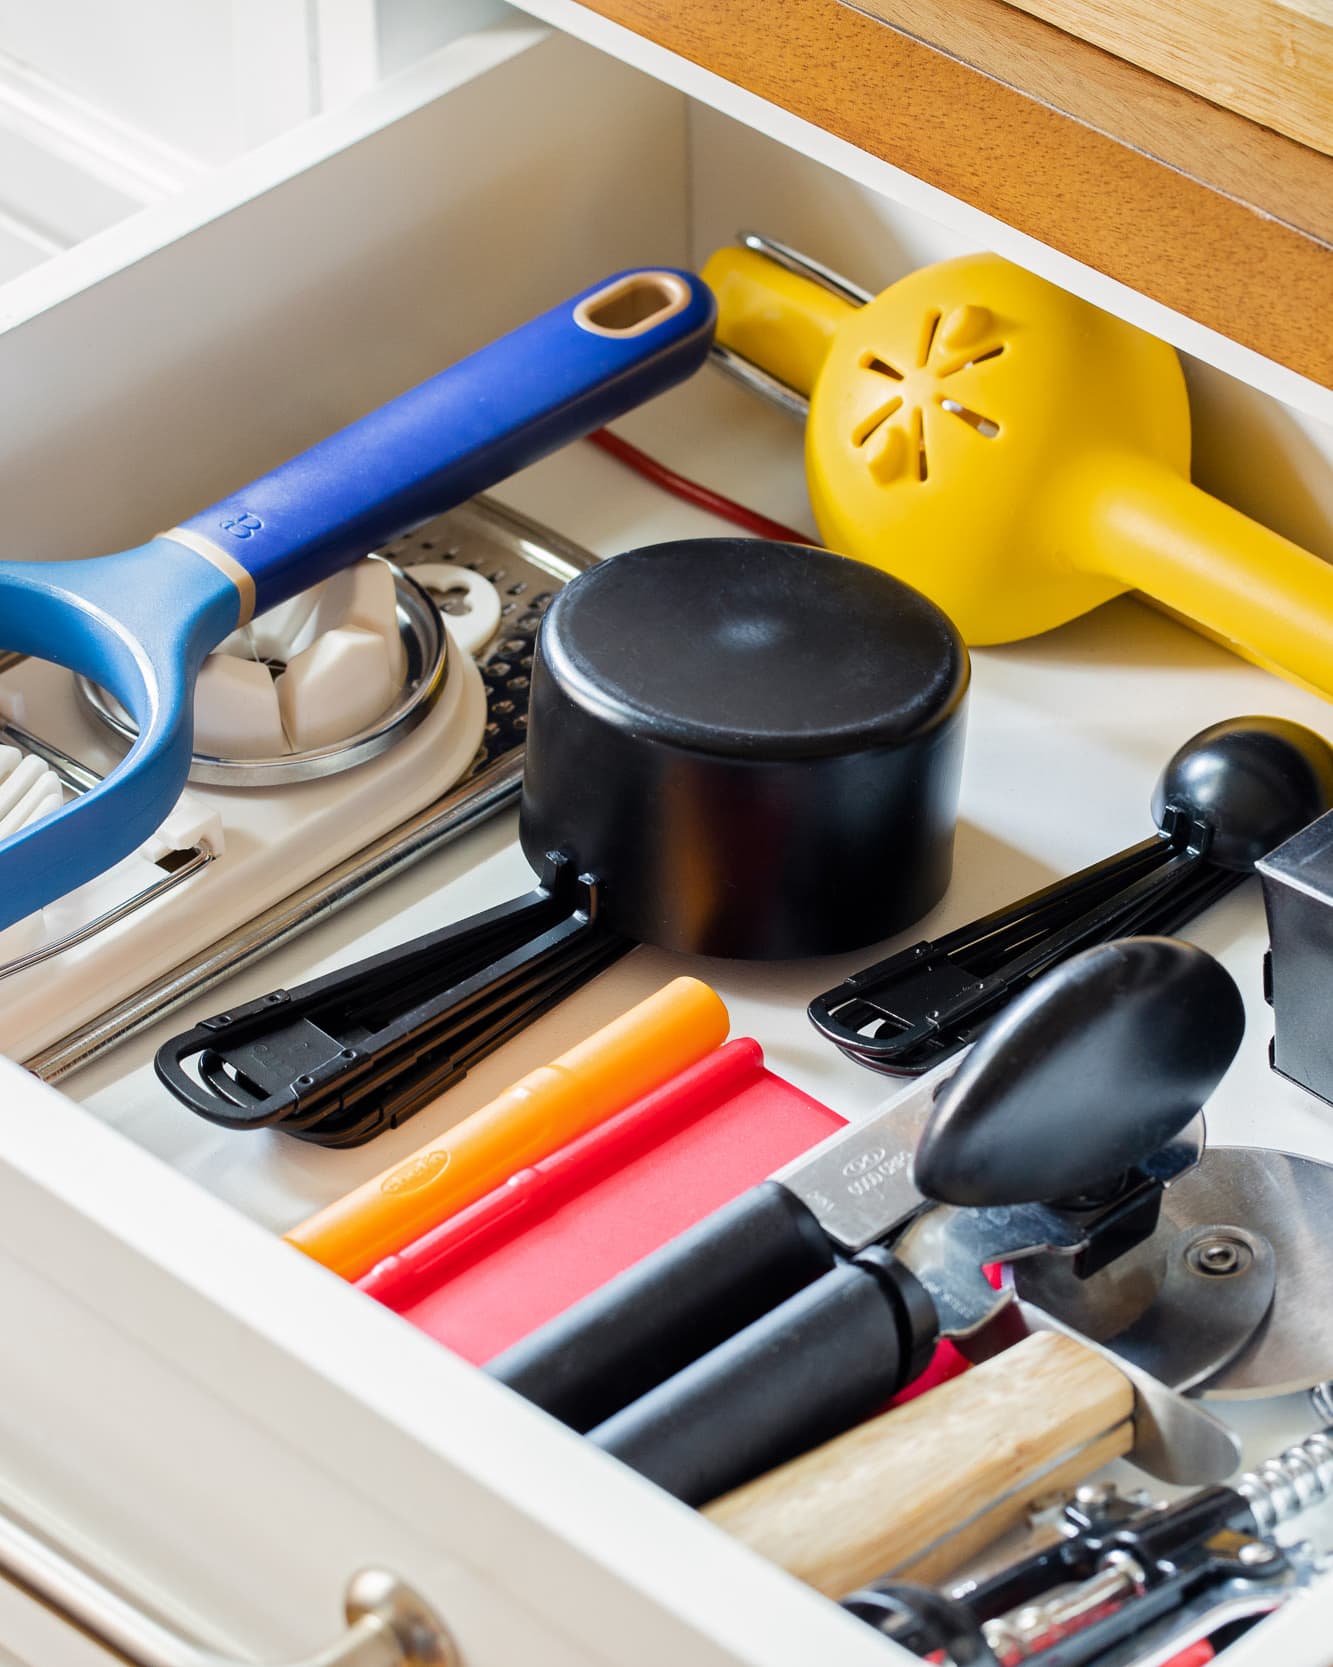 Organizing Secrets from a Manhattan Design Guru  Junk drawer organizing,  Declutter your home, Organization hacks